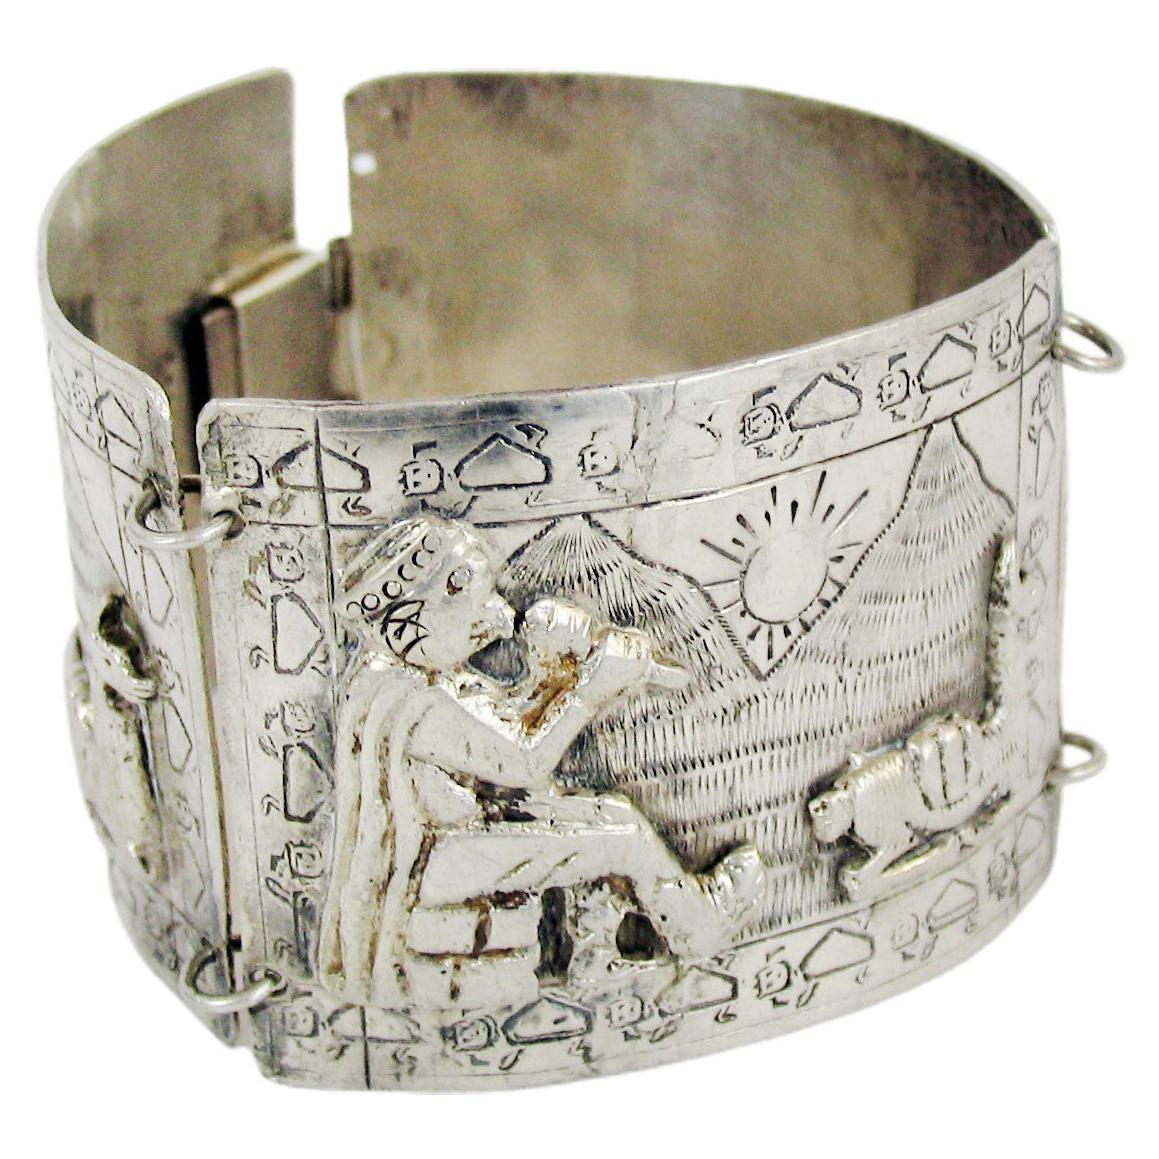 Vintage Peruvian Silver Bracelet from Industria Peruana, 1920s